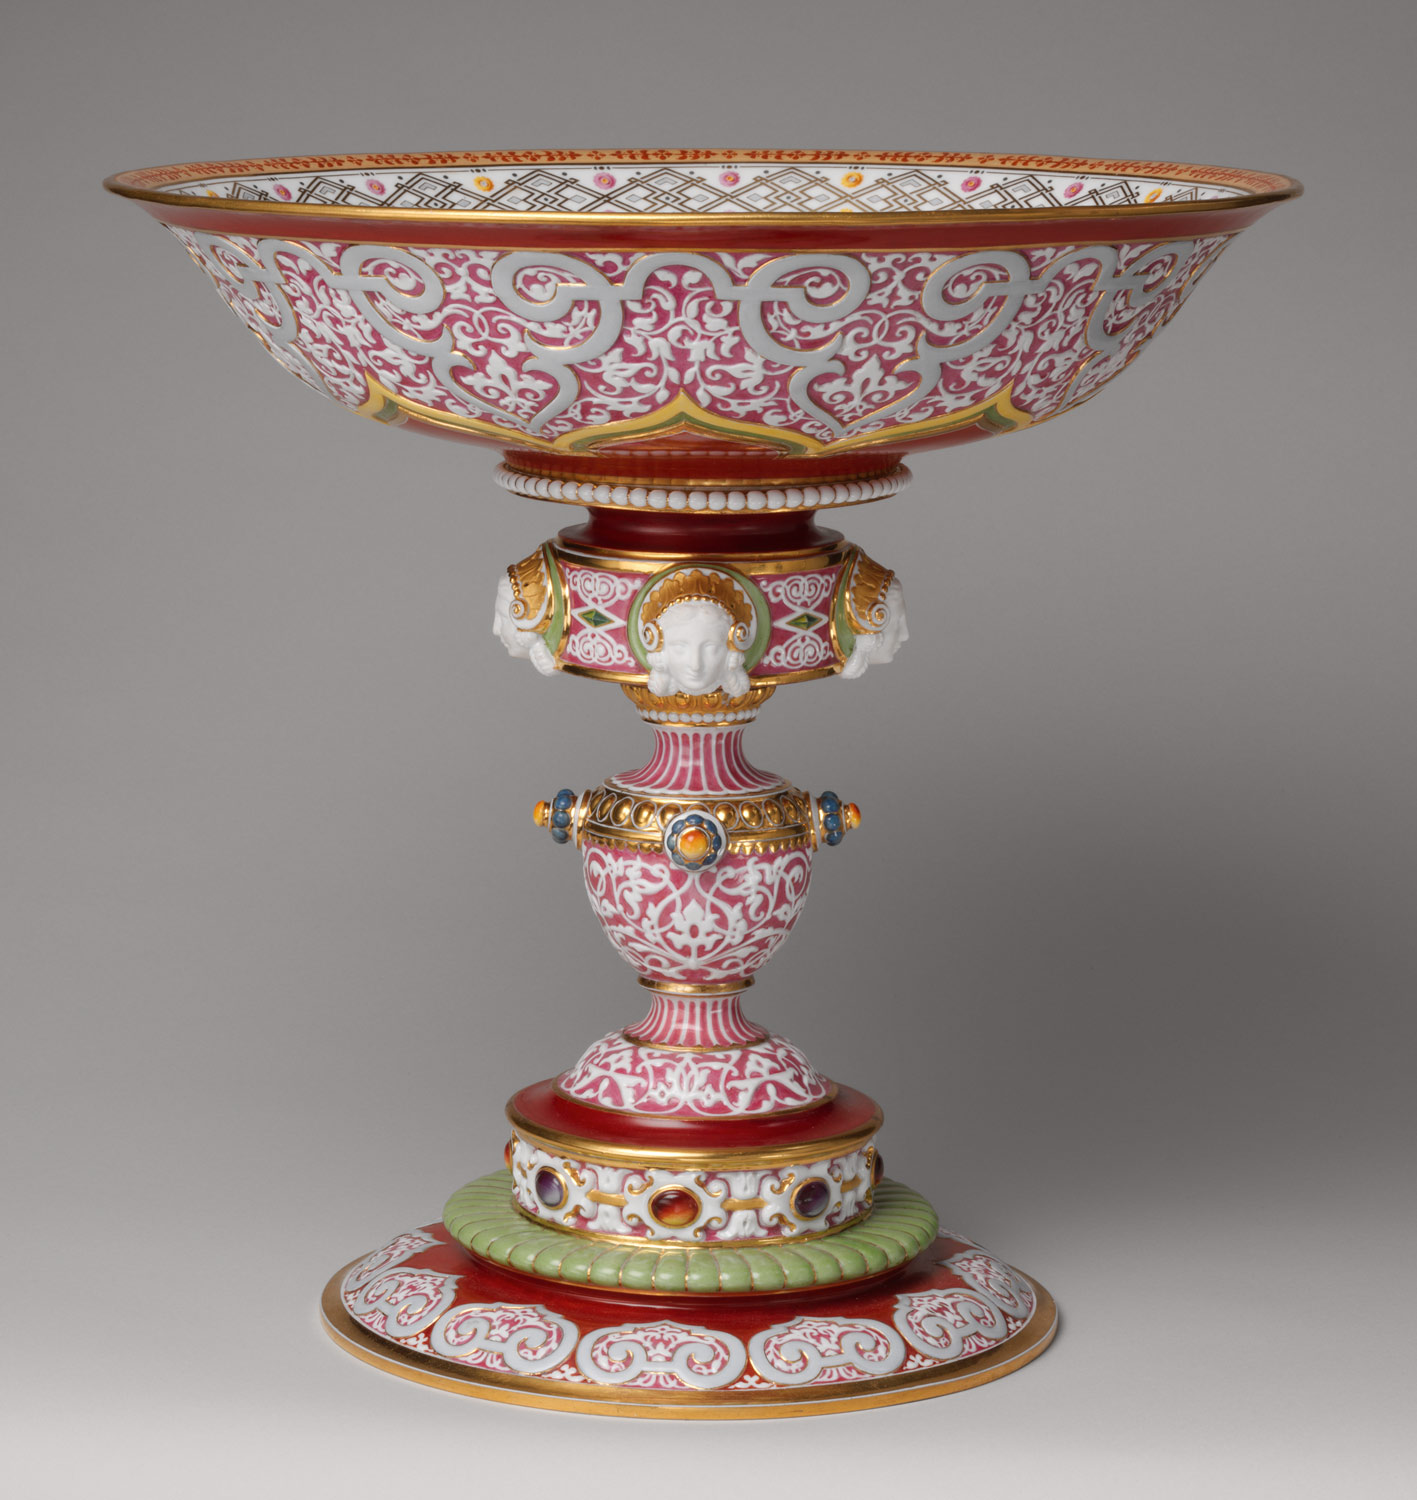 1837 Standing Cup. Hard-paste porcelain. metmuseum